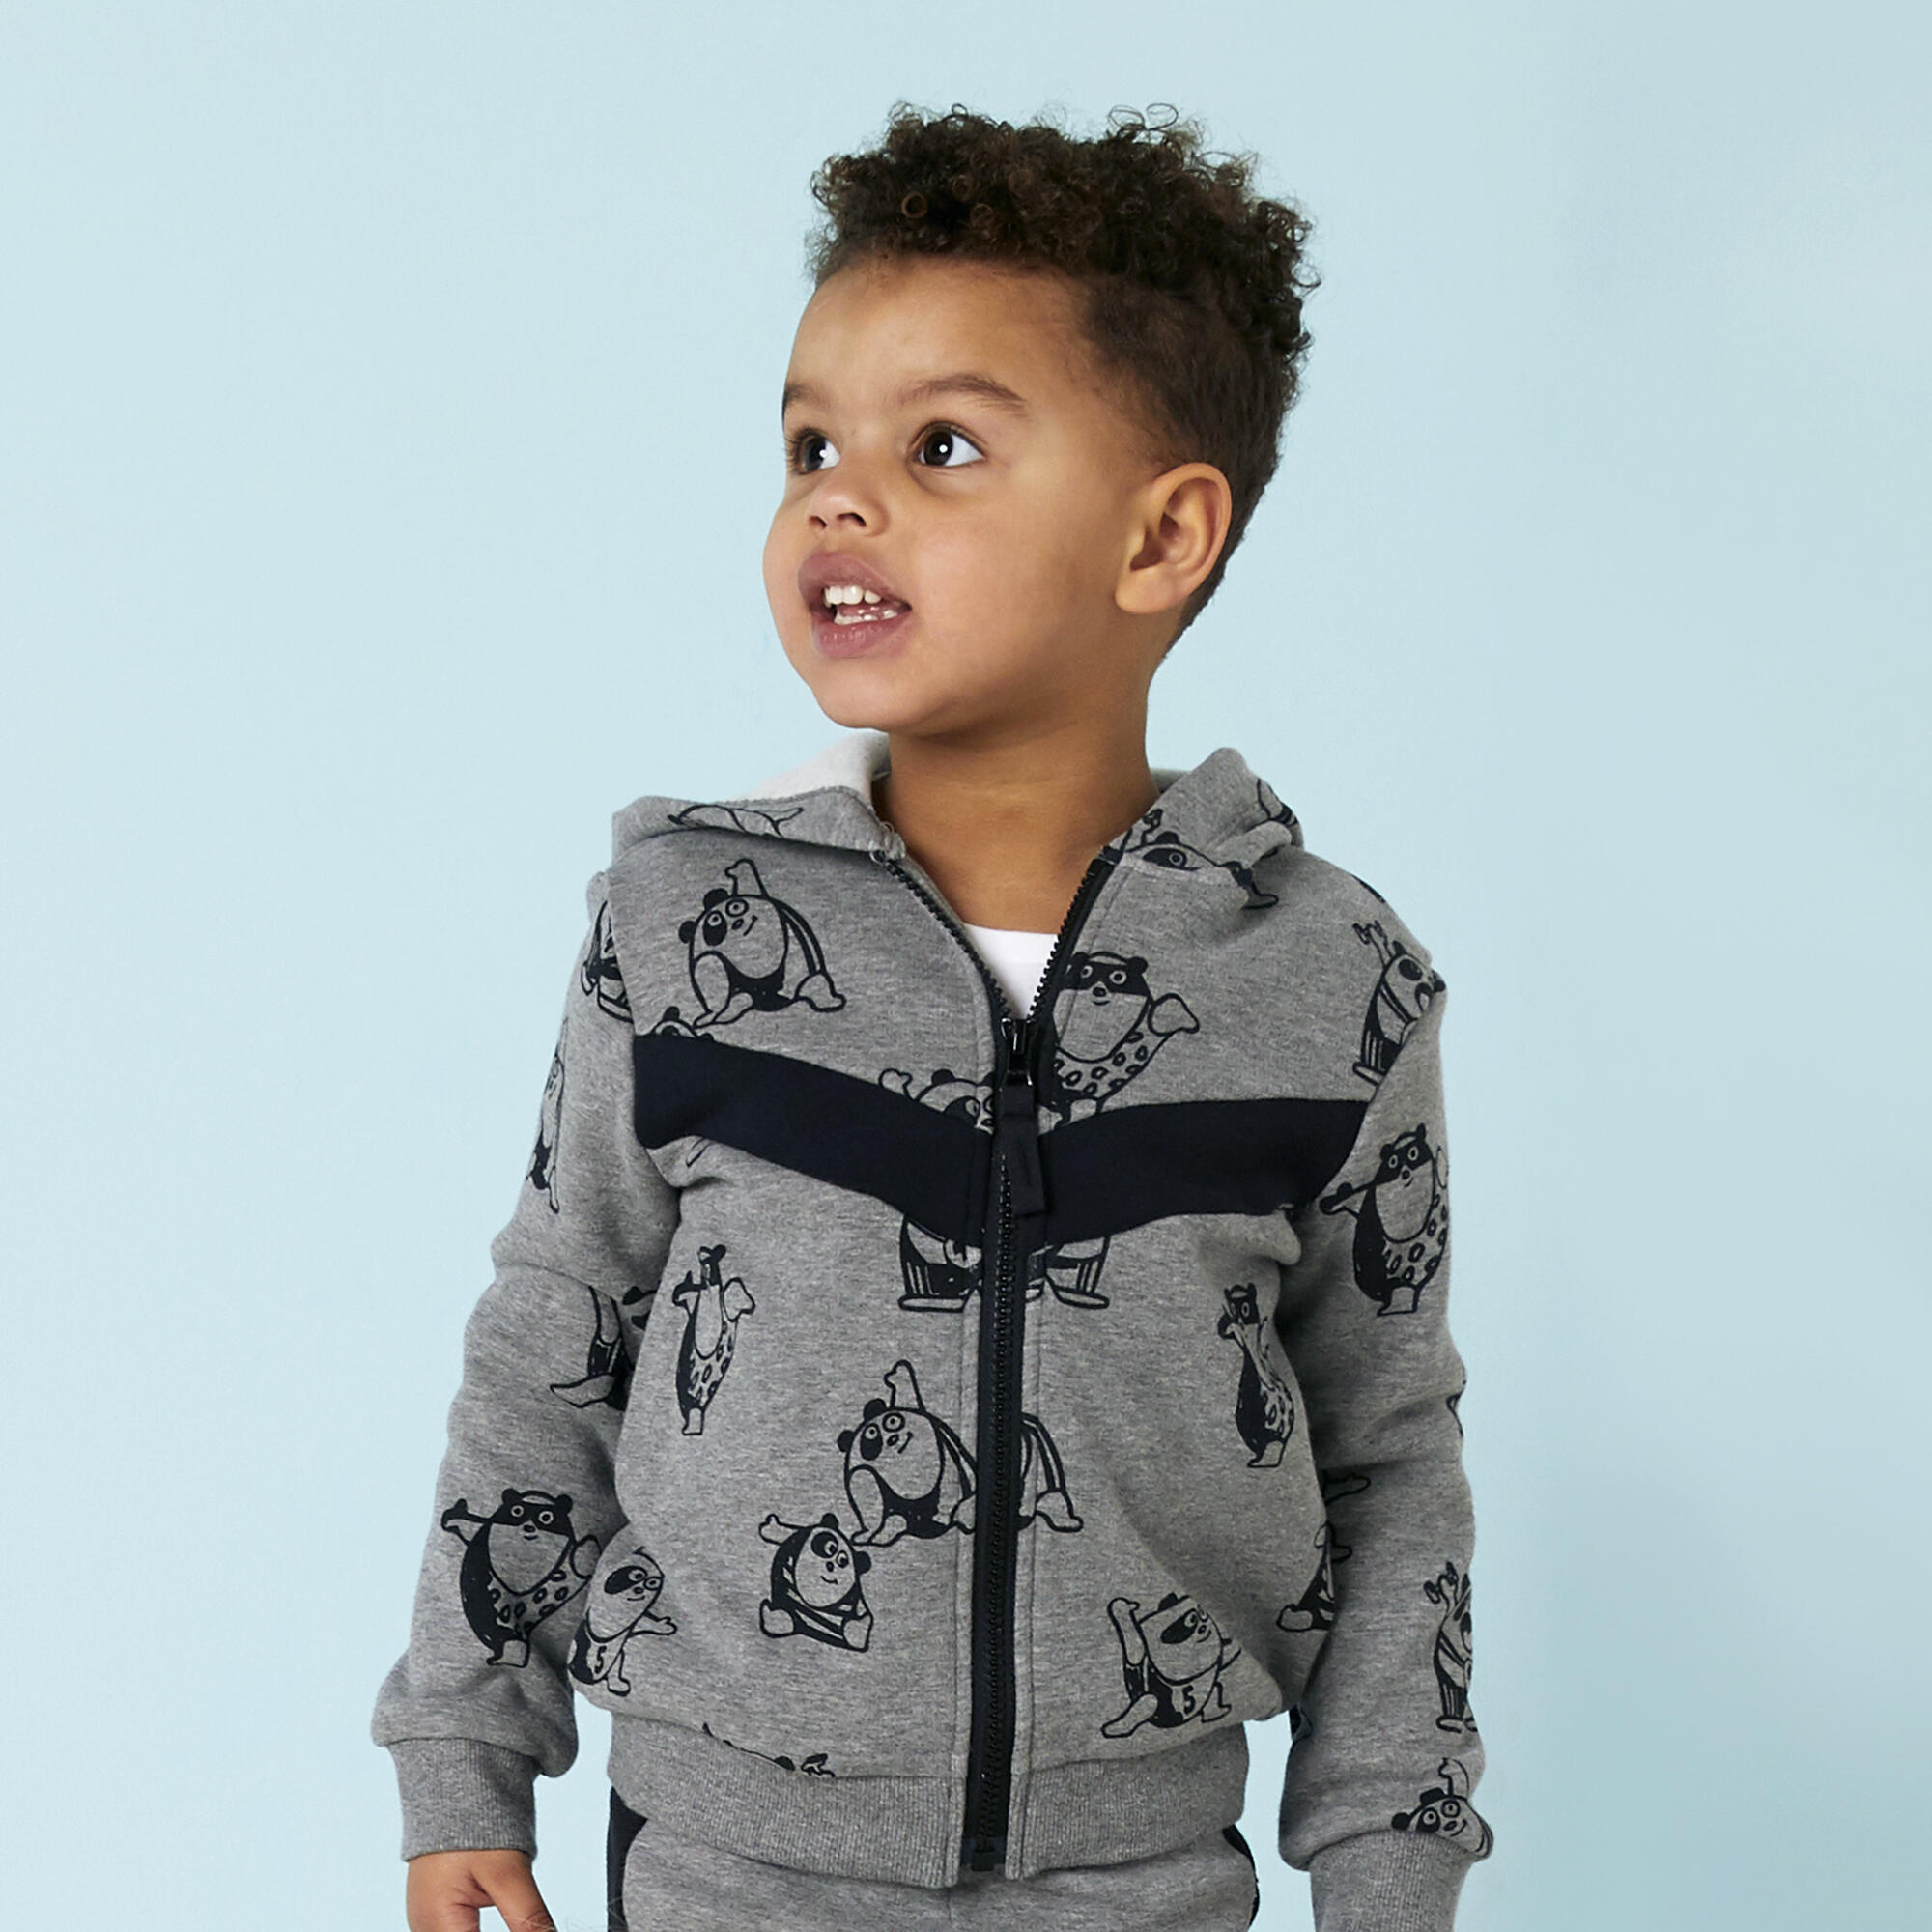 DOMYOS Baby's Basic Zip-Up Sweatshirt - Grey With Design